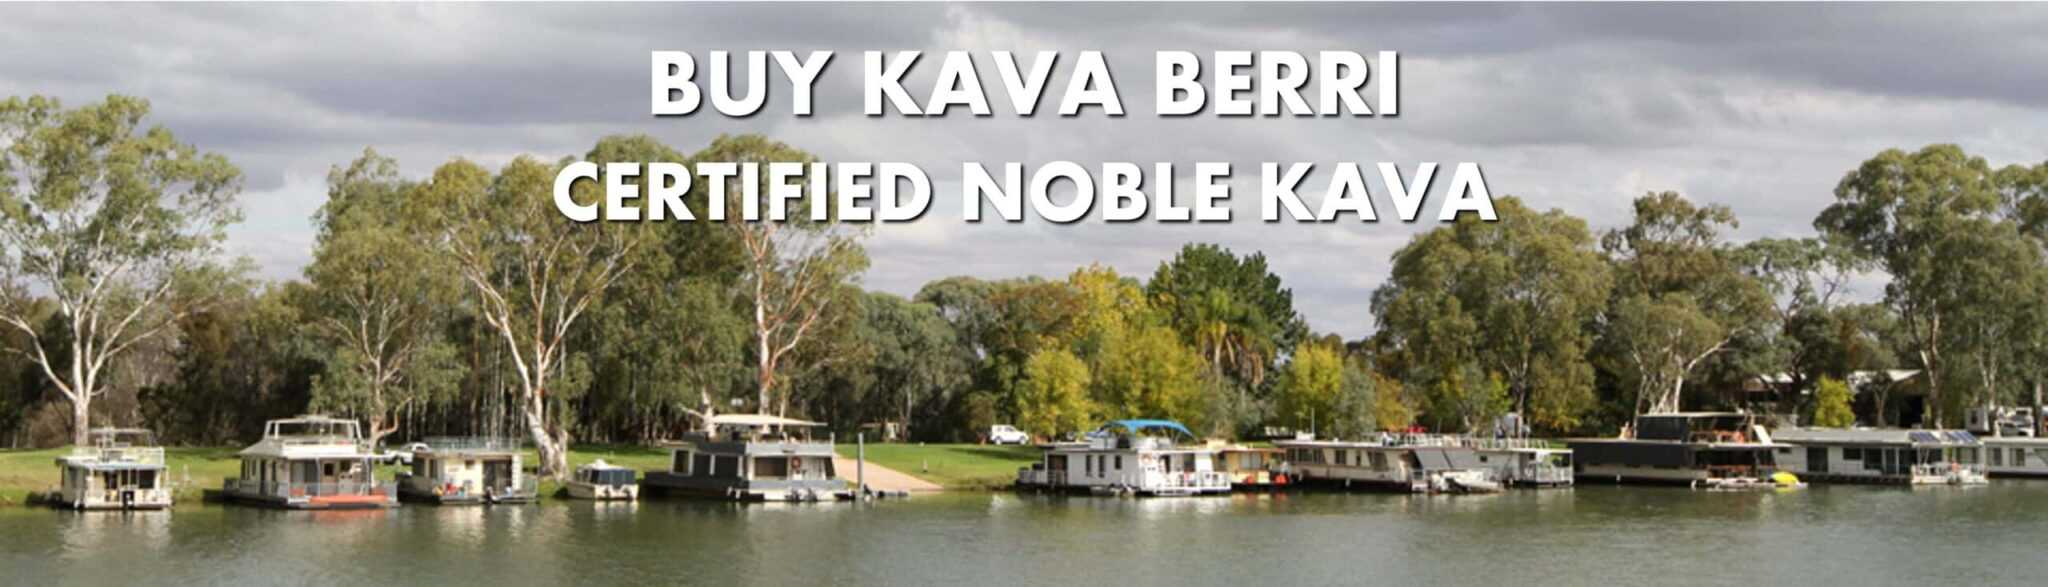 Houseboats on the River Murray near Berri with caption Buy Kava Berri Certified Noble Kava